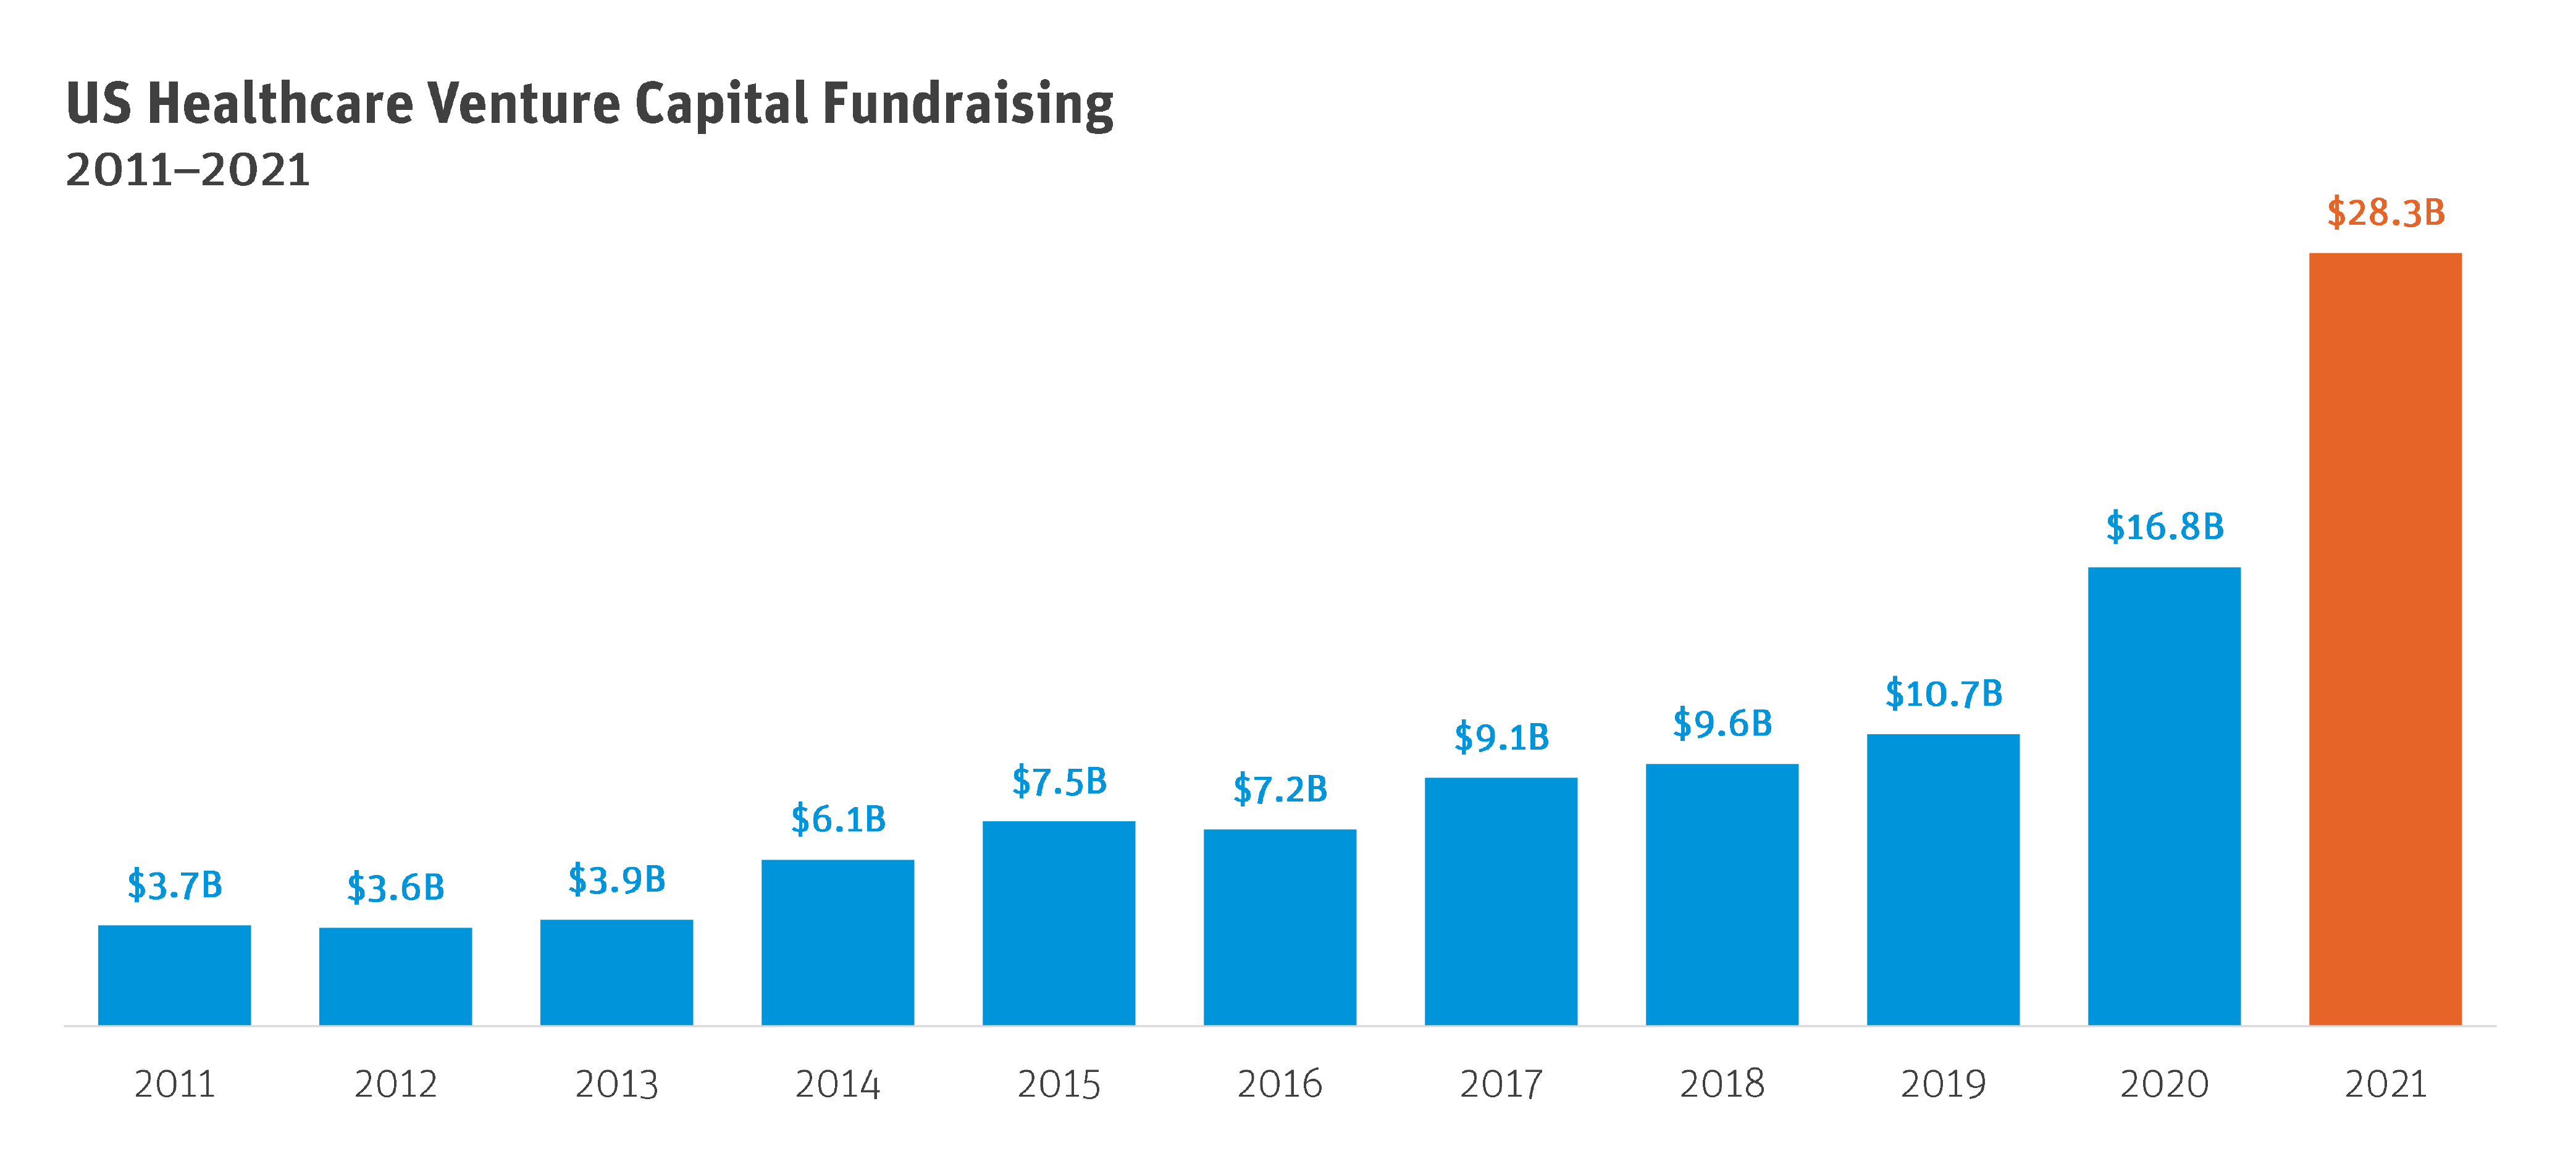 US Healthcare Venture Capital Fundraising (2011-2021)